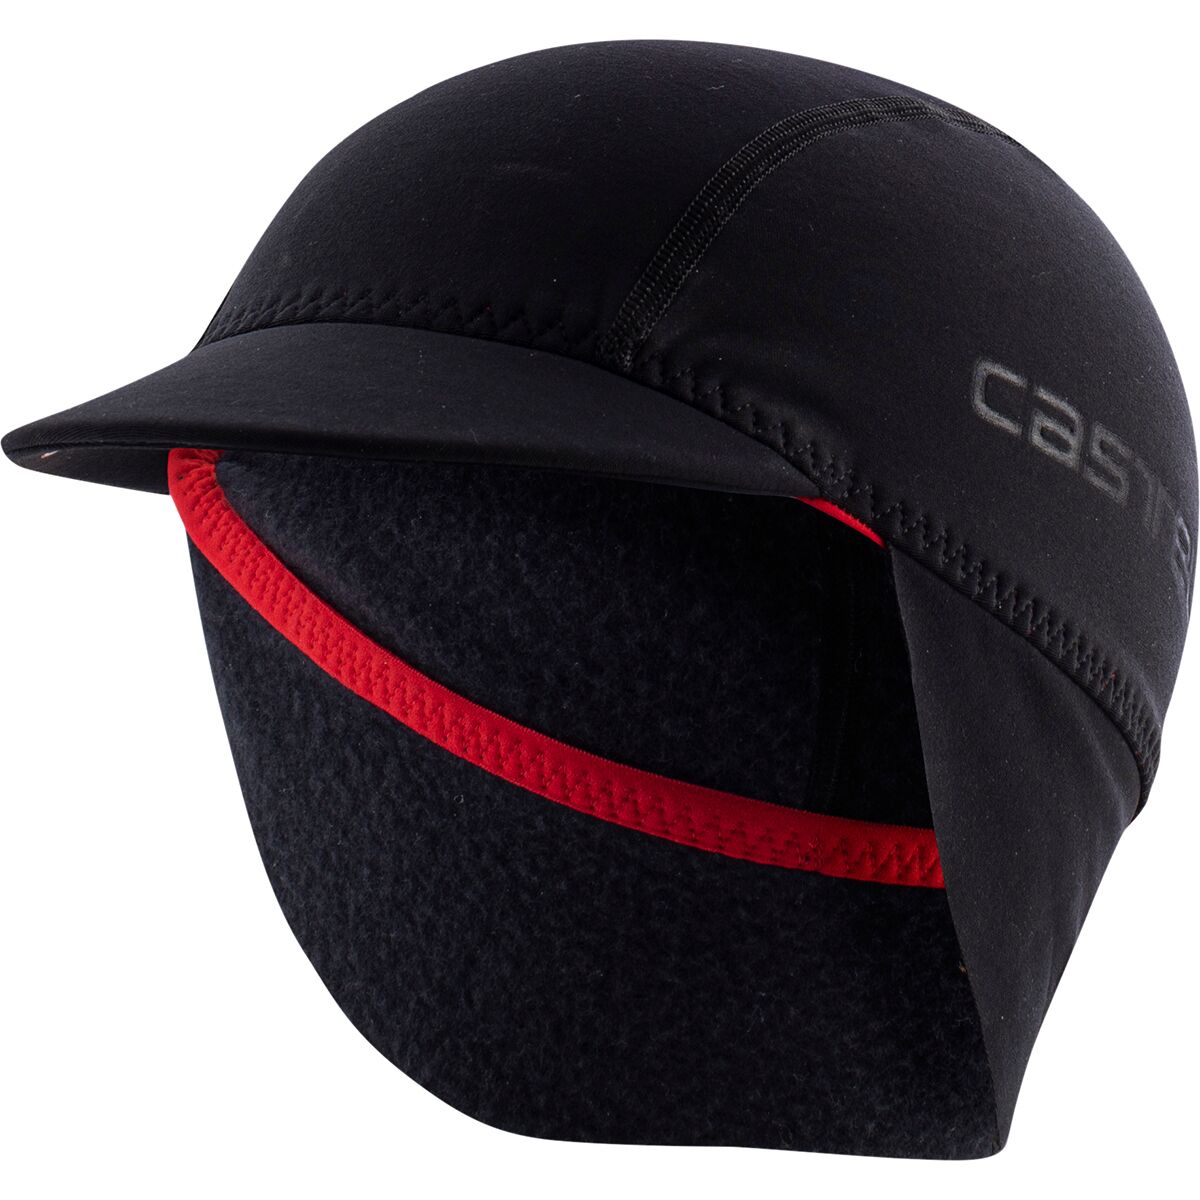 Castelli Nano Thermal Cap - Men's Black, One Size